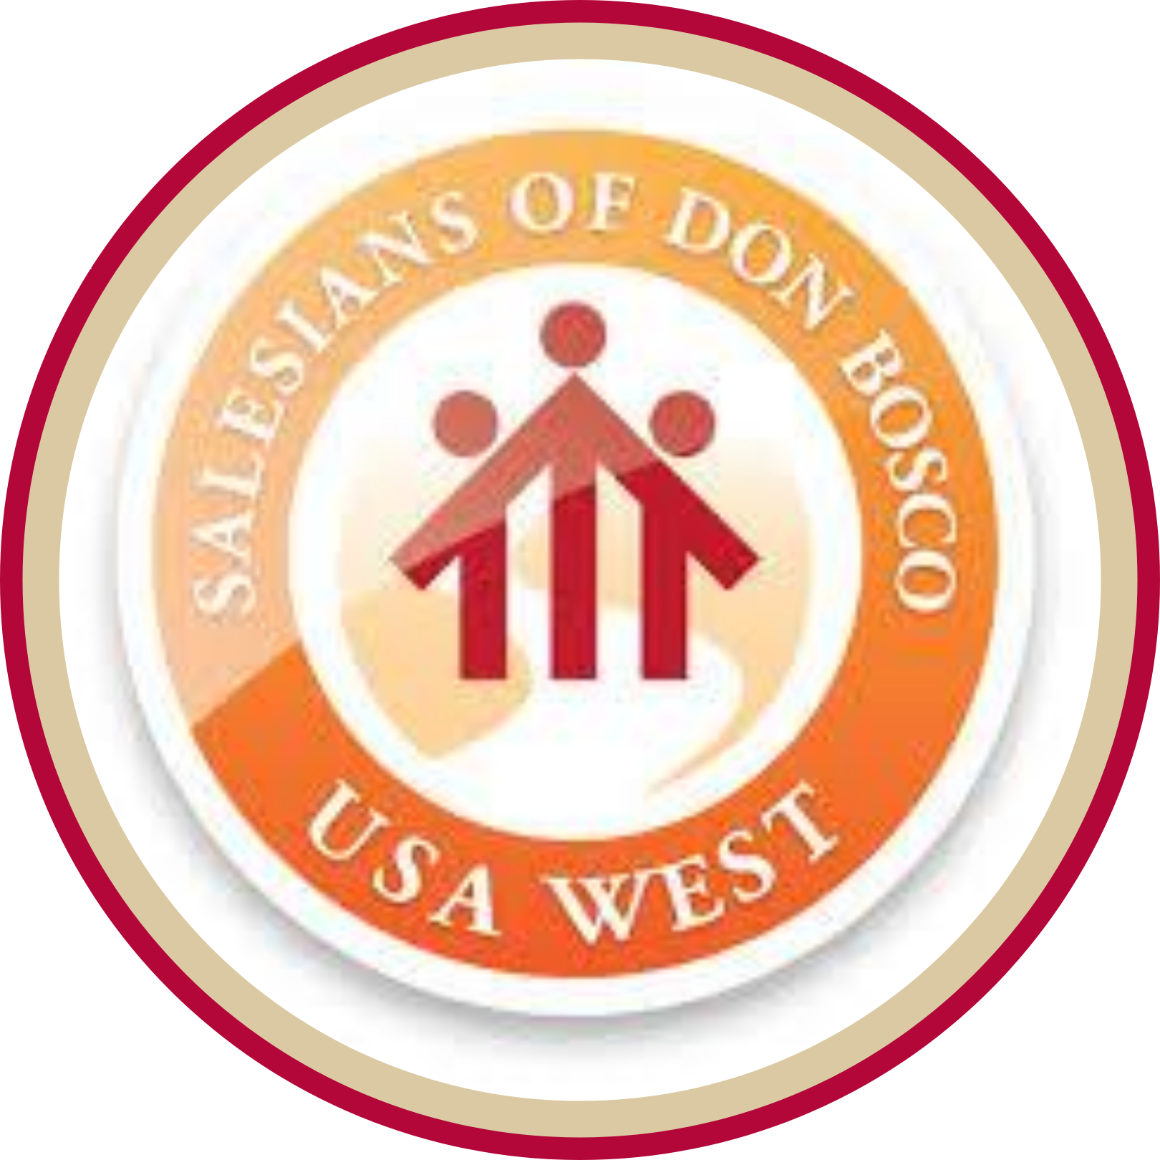 Salesians of Don Bosco logo